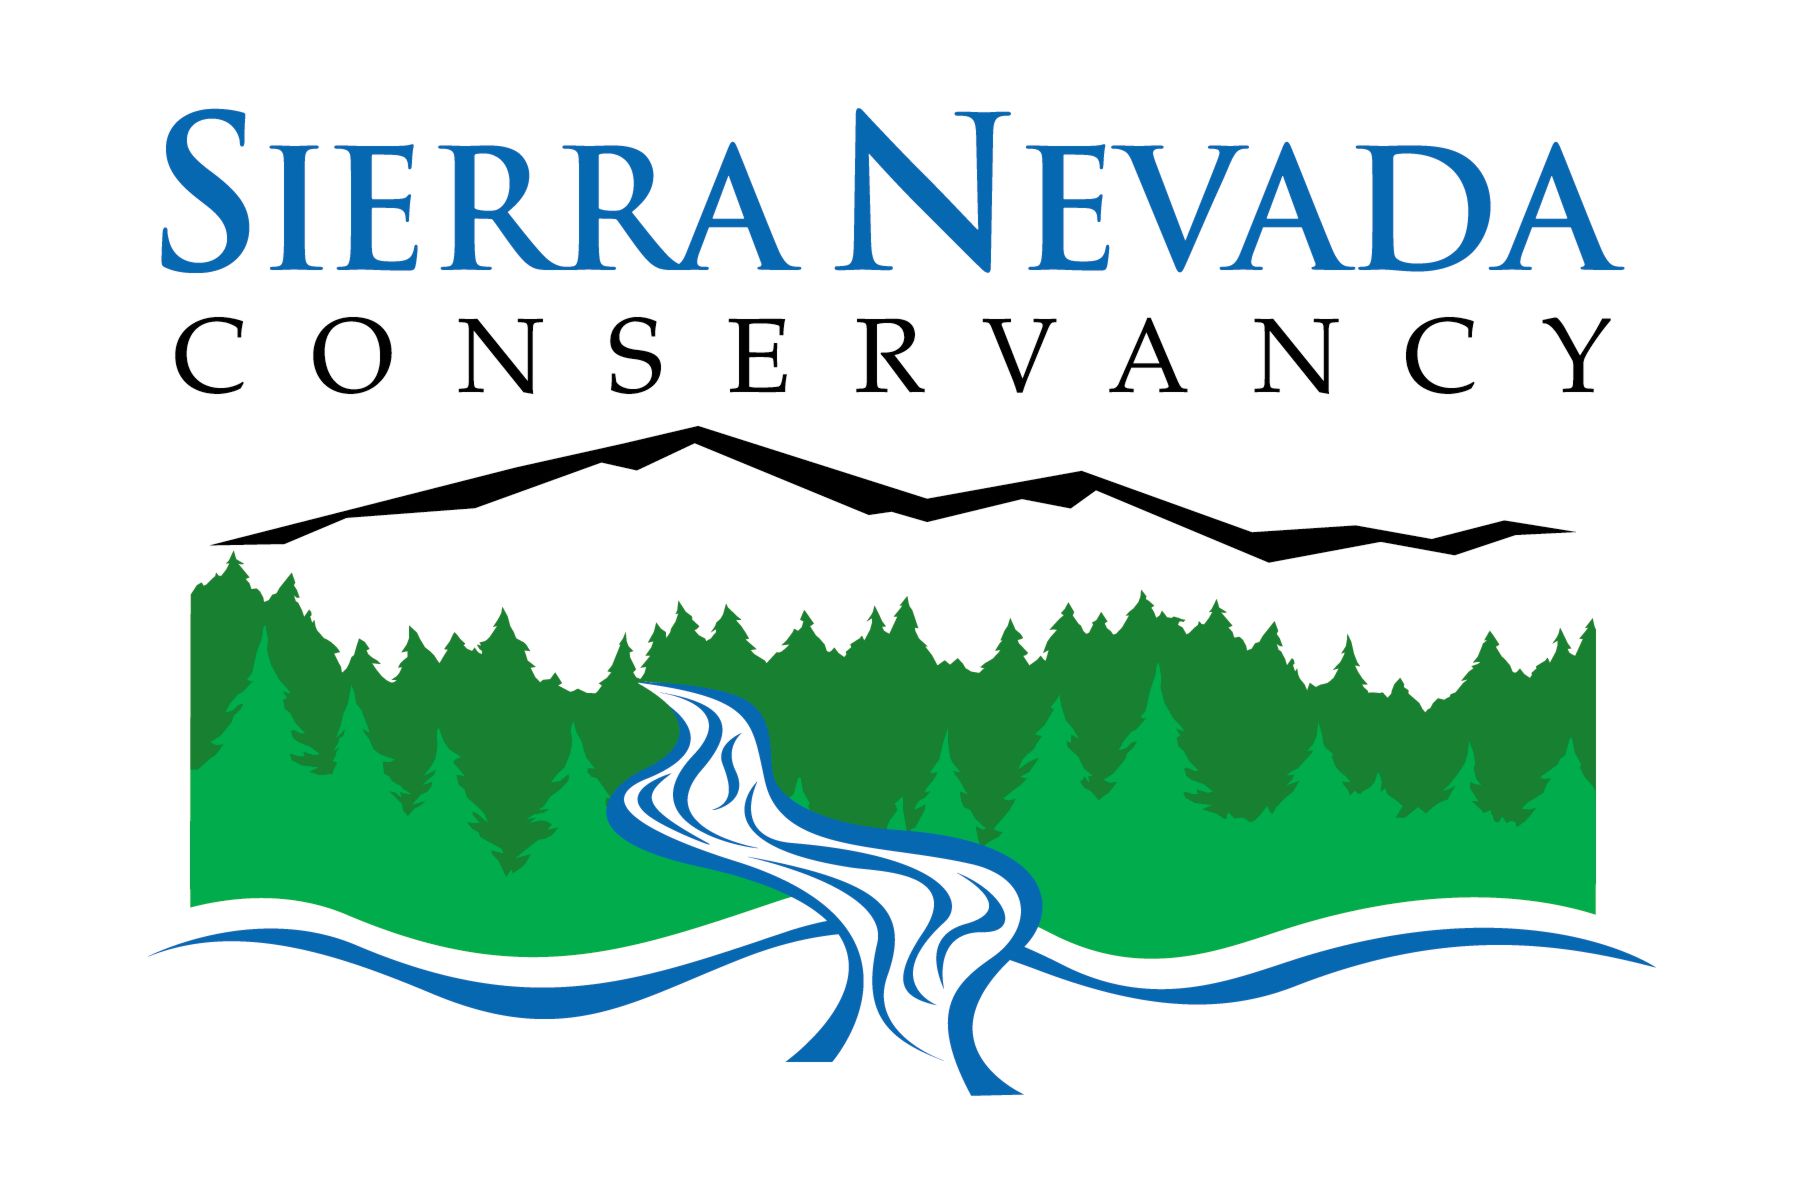 Sierra Nevada Conservancy Logo